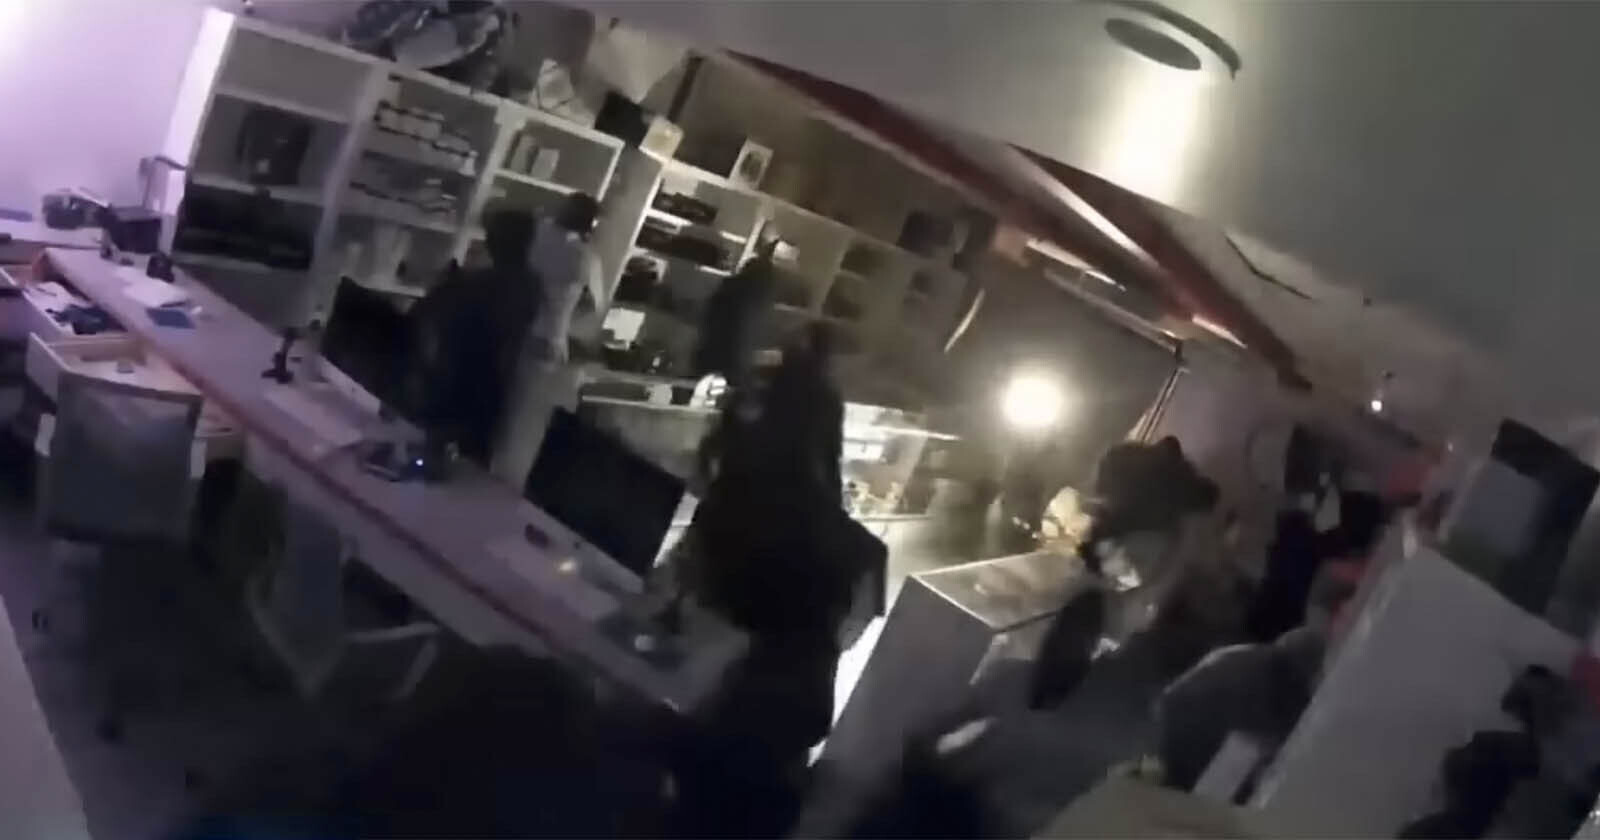 13 Burglars Ransack California Camera Store, Steal $65,000 in Gear